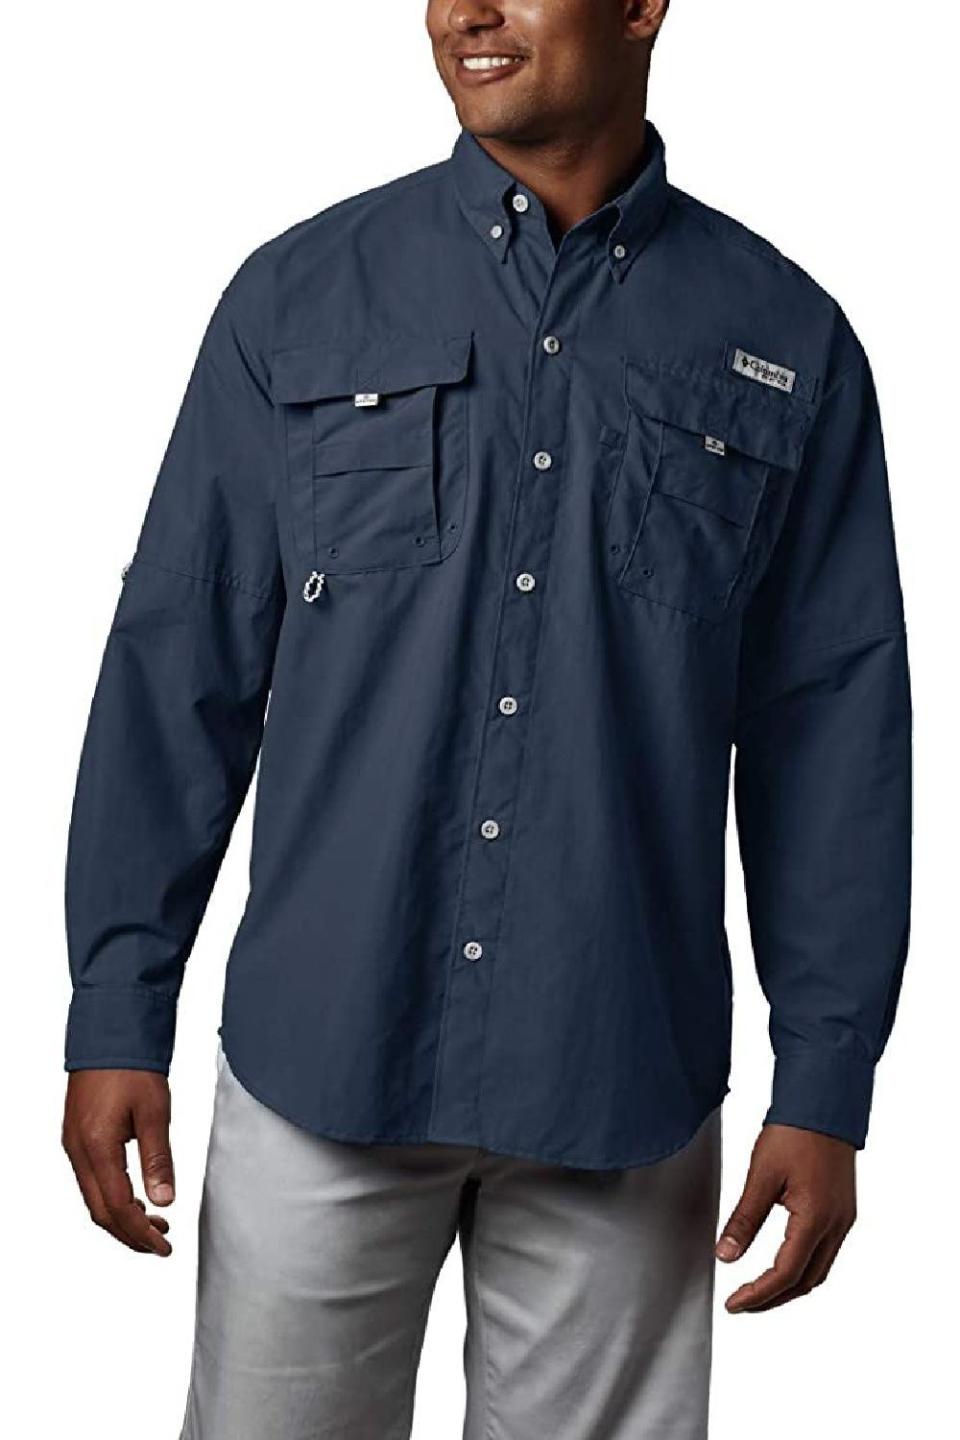 2) Men’s PFG Bahama II Long Sleeve Shirt